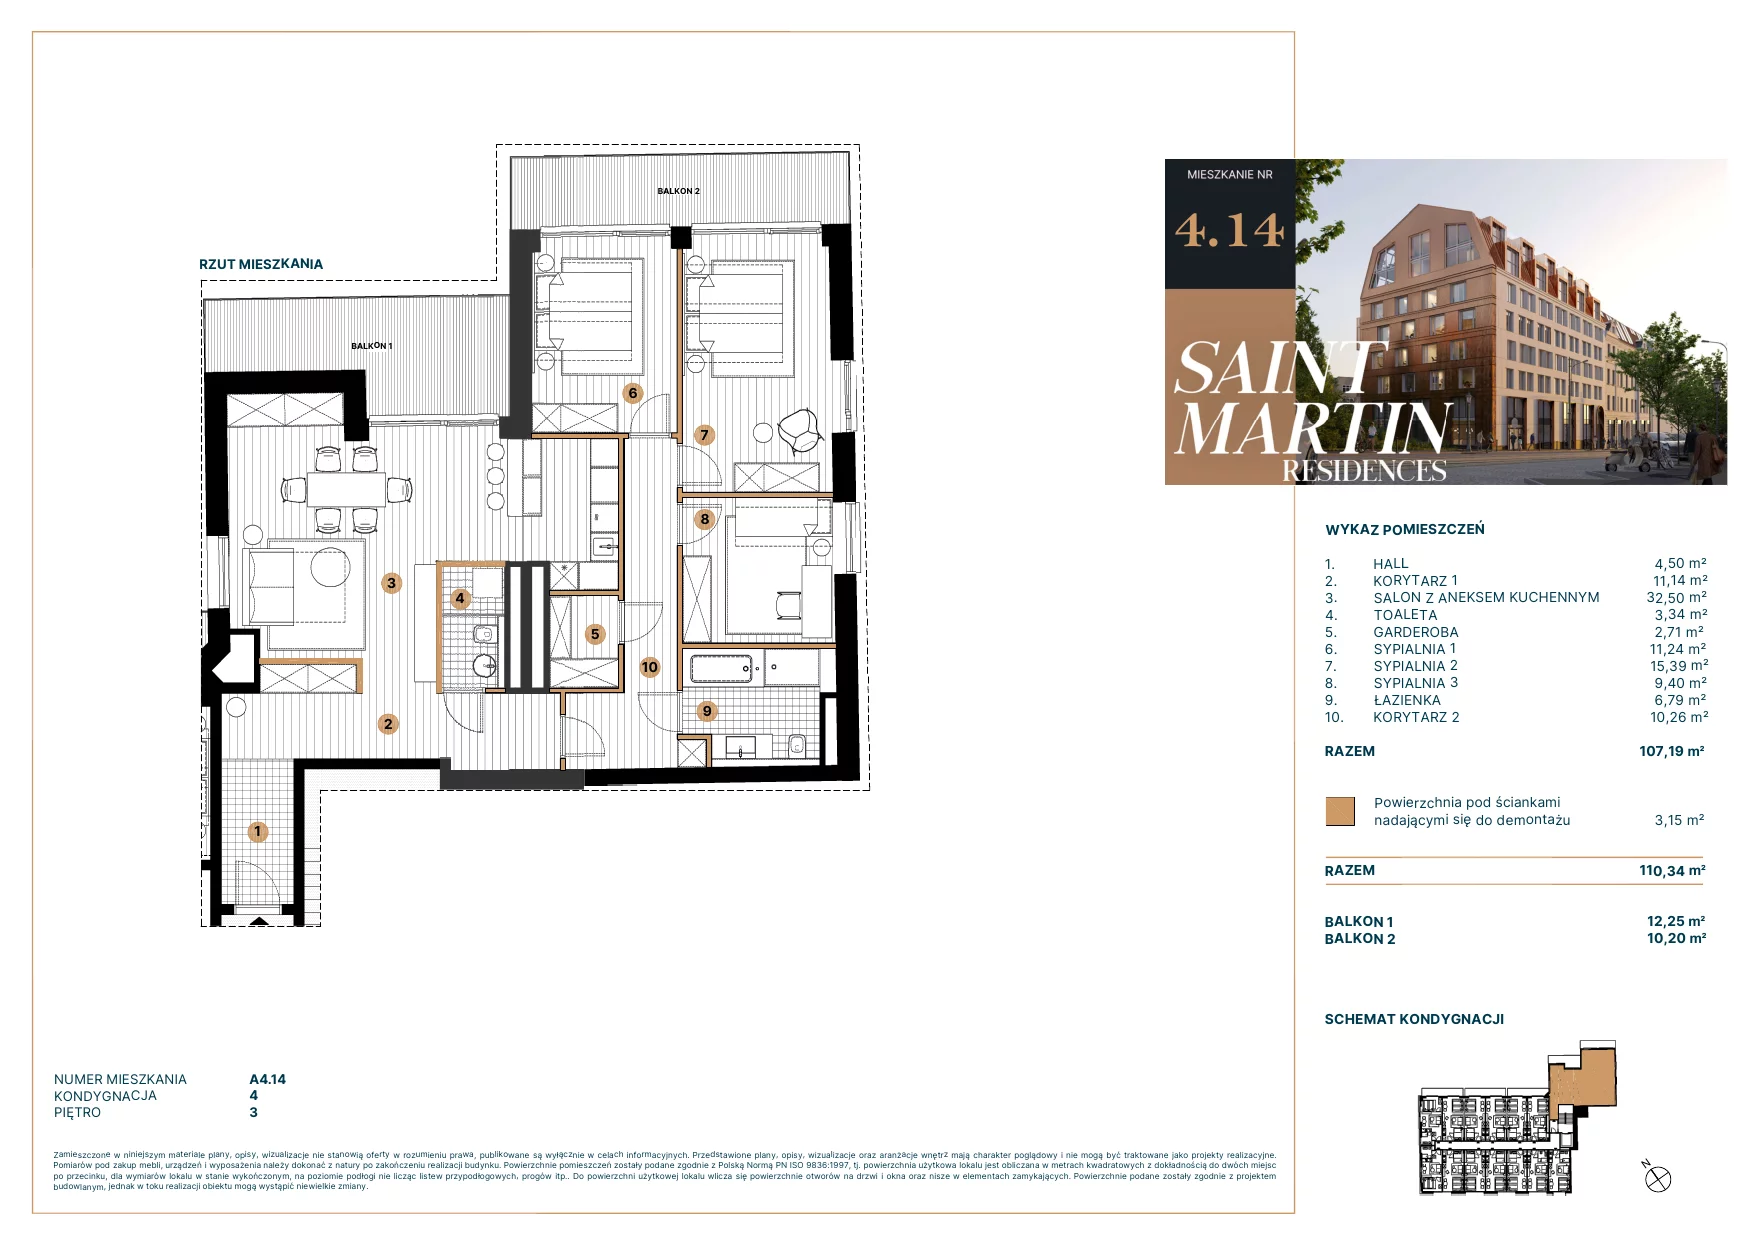 Apartament 108,12 m², piętro 3, oferta nr A4.14, Saint Martin Residences II, Poznań, Stare Miasto, Stare Miasto, ul. Podgórna 7